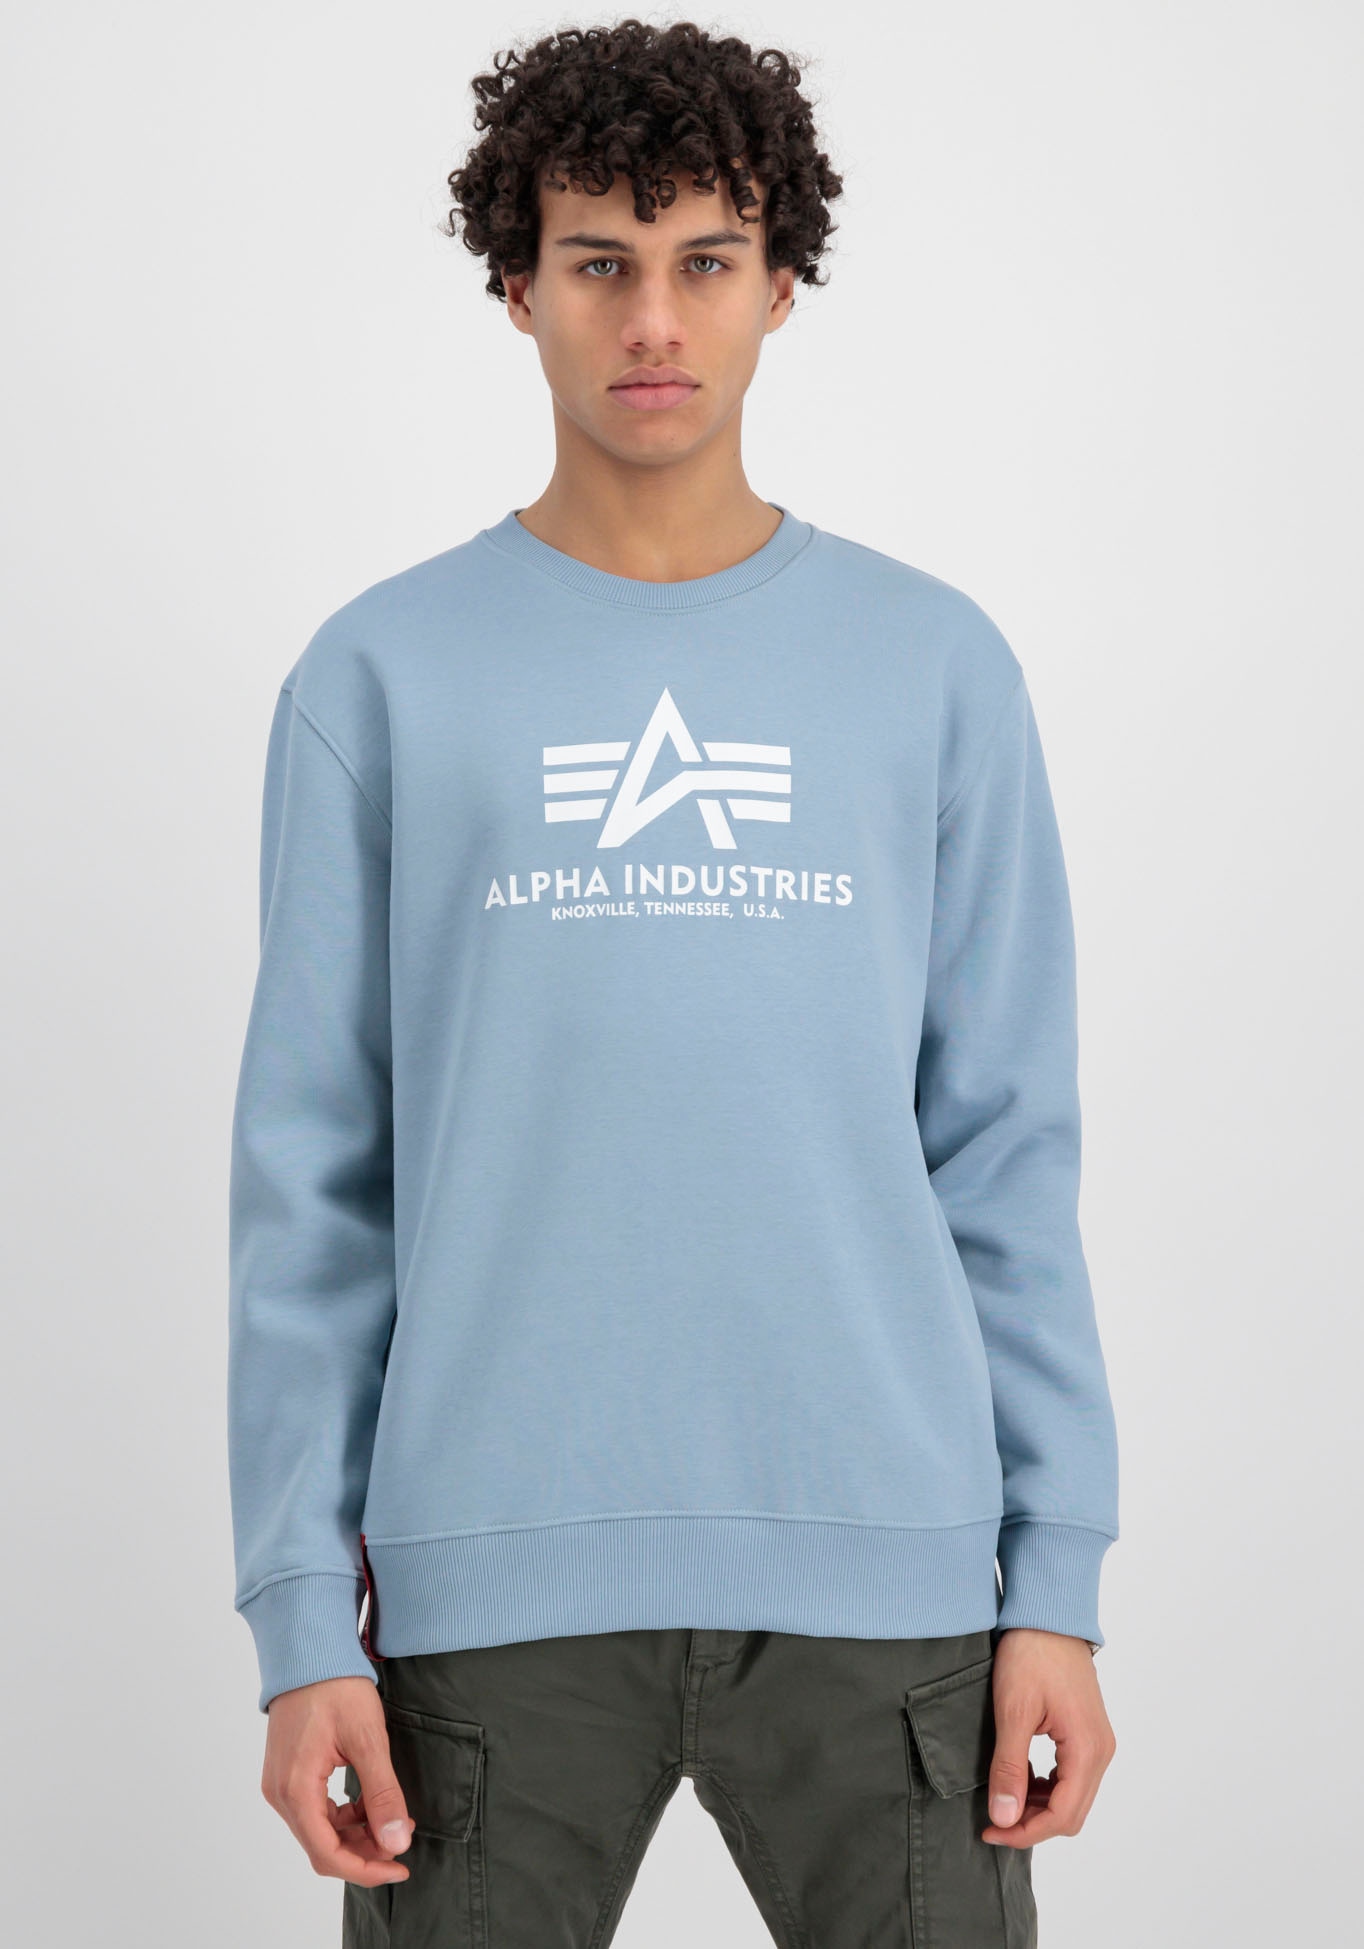 Industries sur Sweater« Sweatshirt Trouver Alpha »Basic